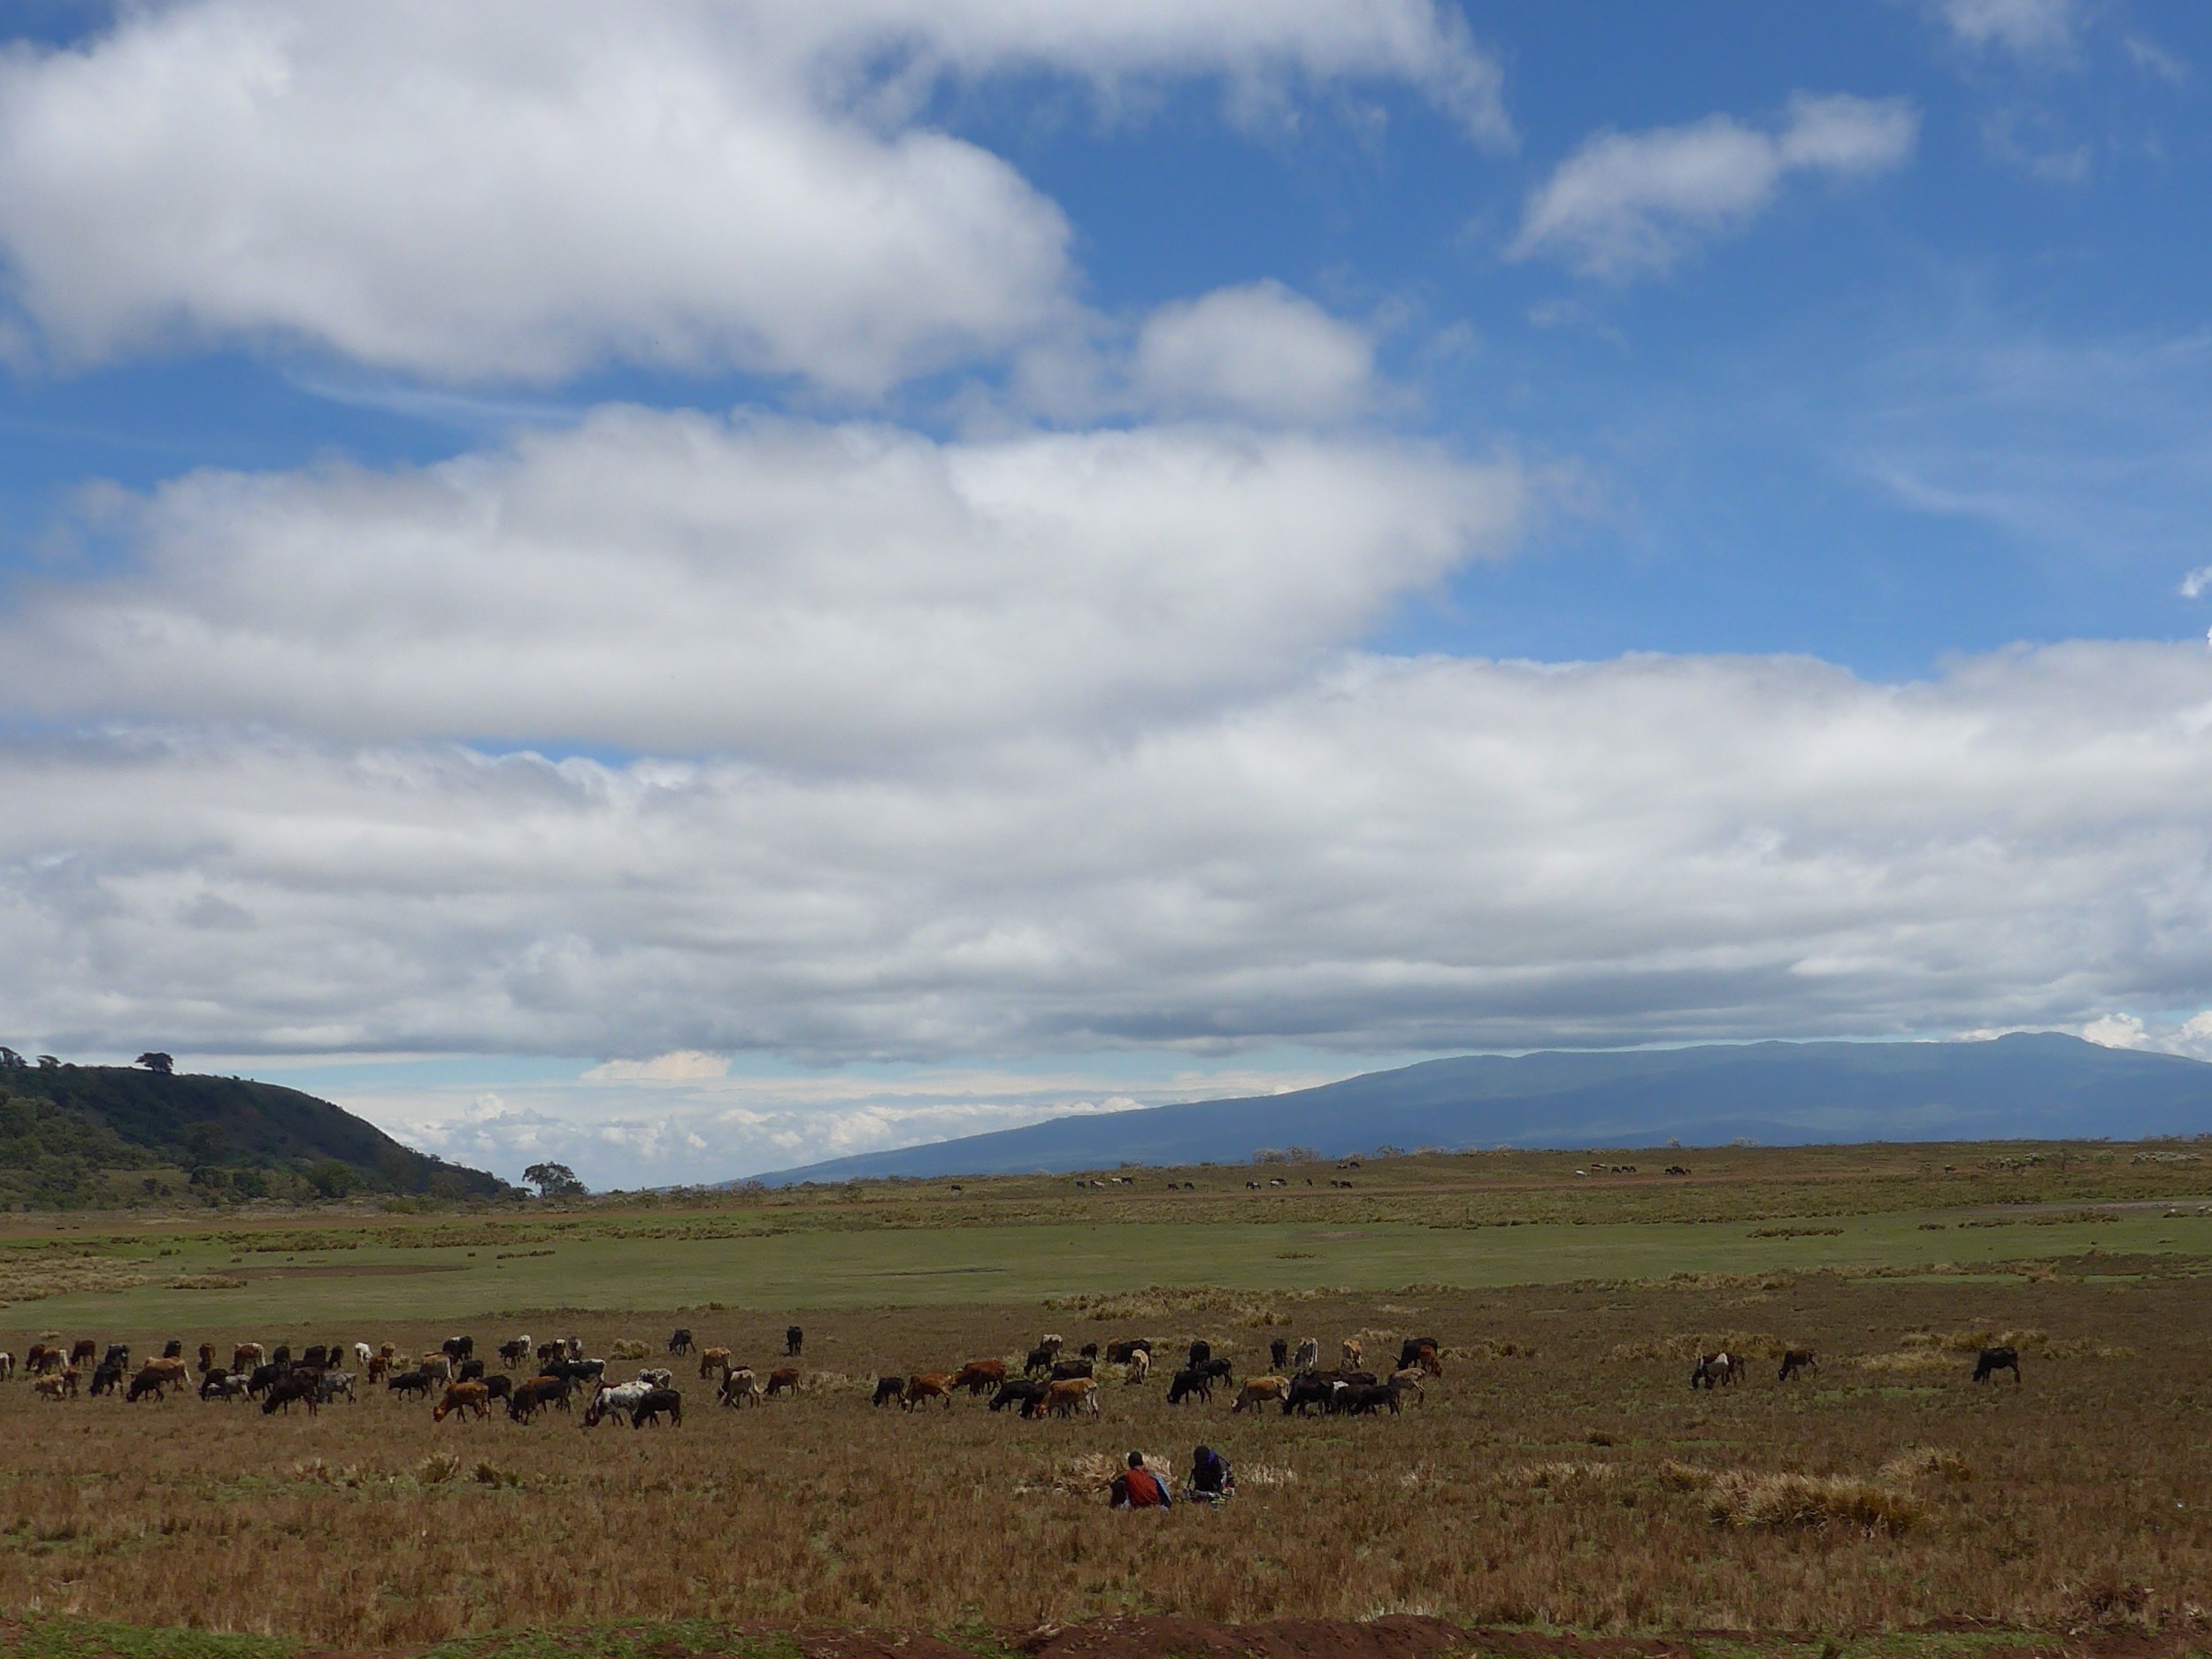 Maasai taking a break while cattle graze